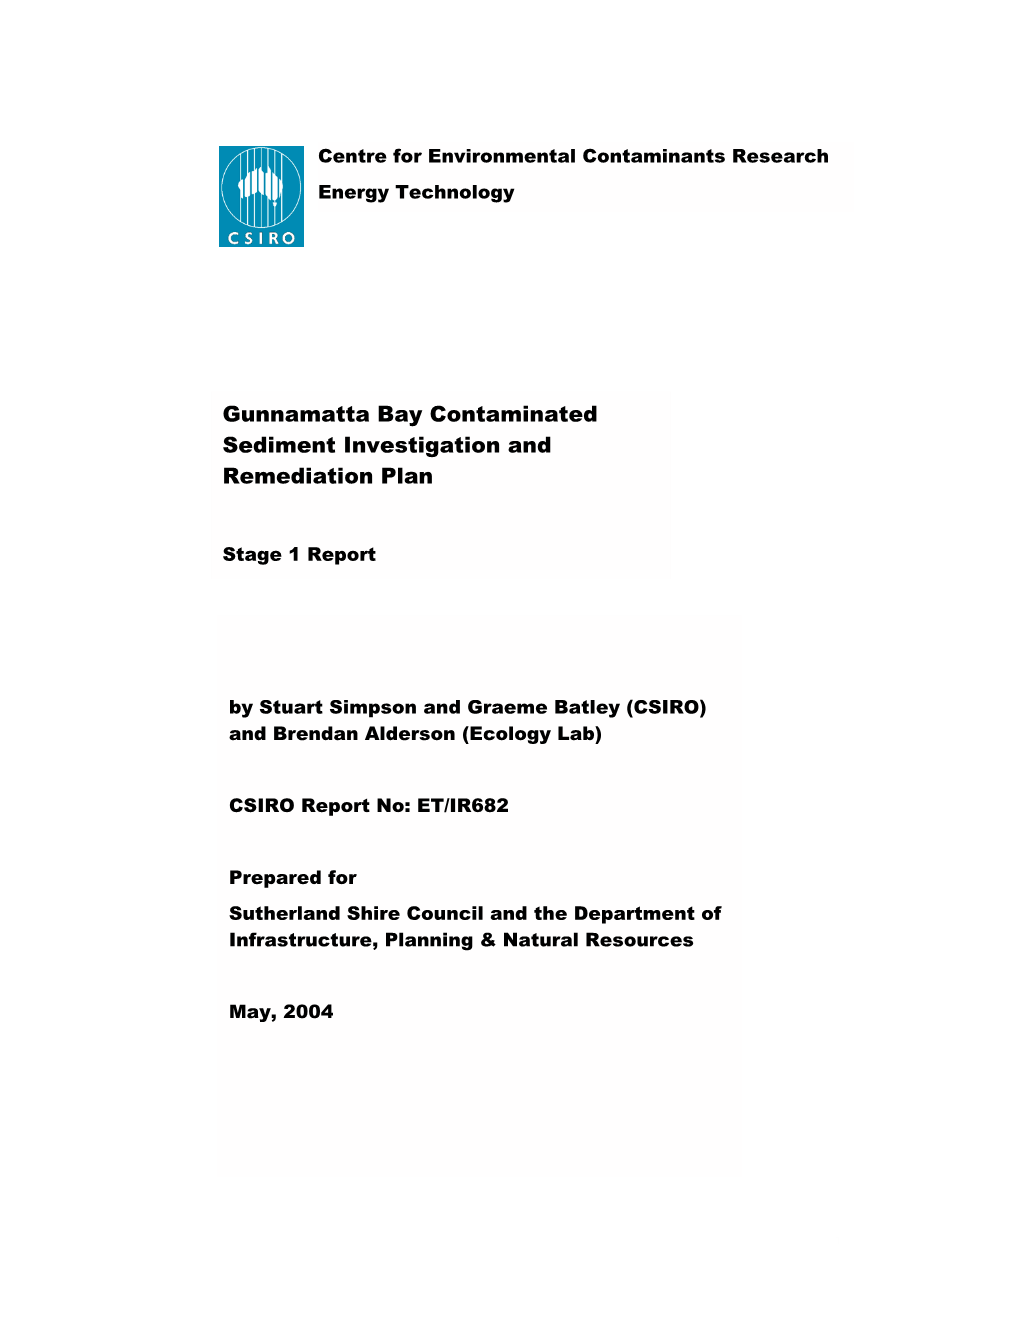 Gunnamatta Bay Contaminated Sediment Investigation and Remediation Plan